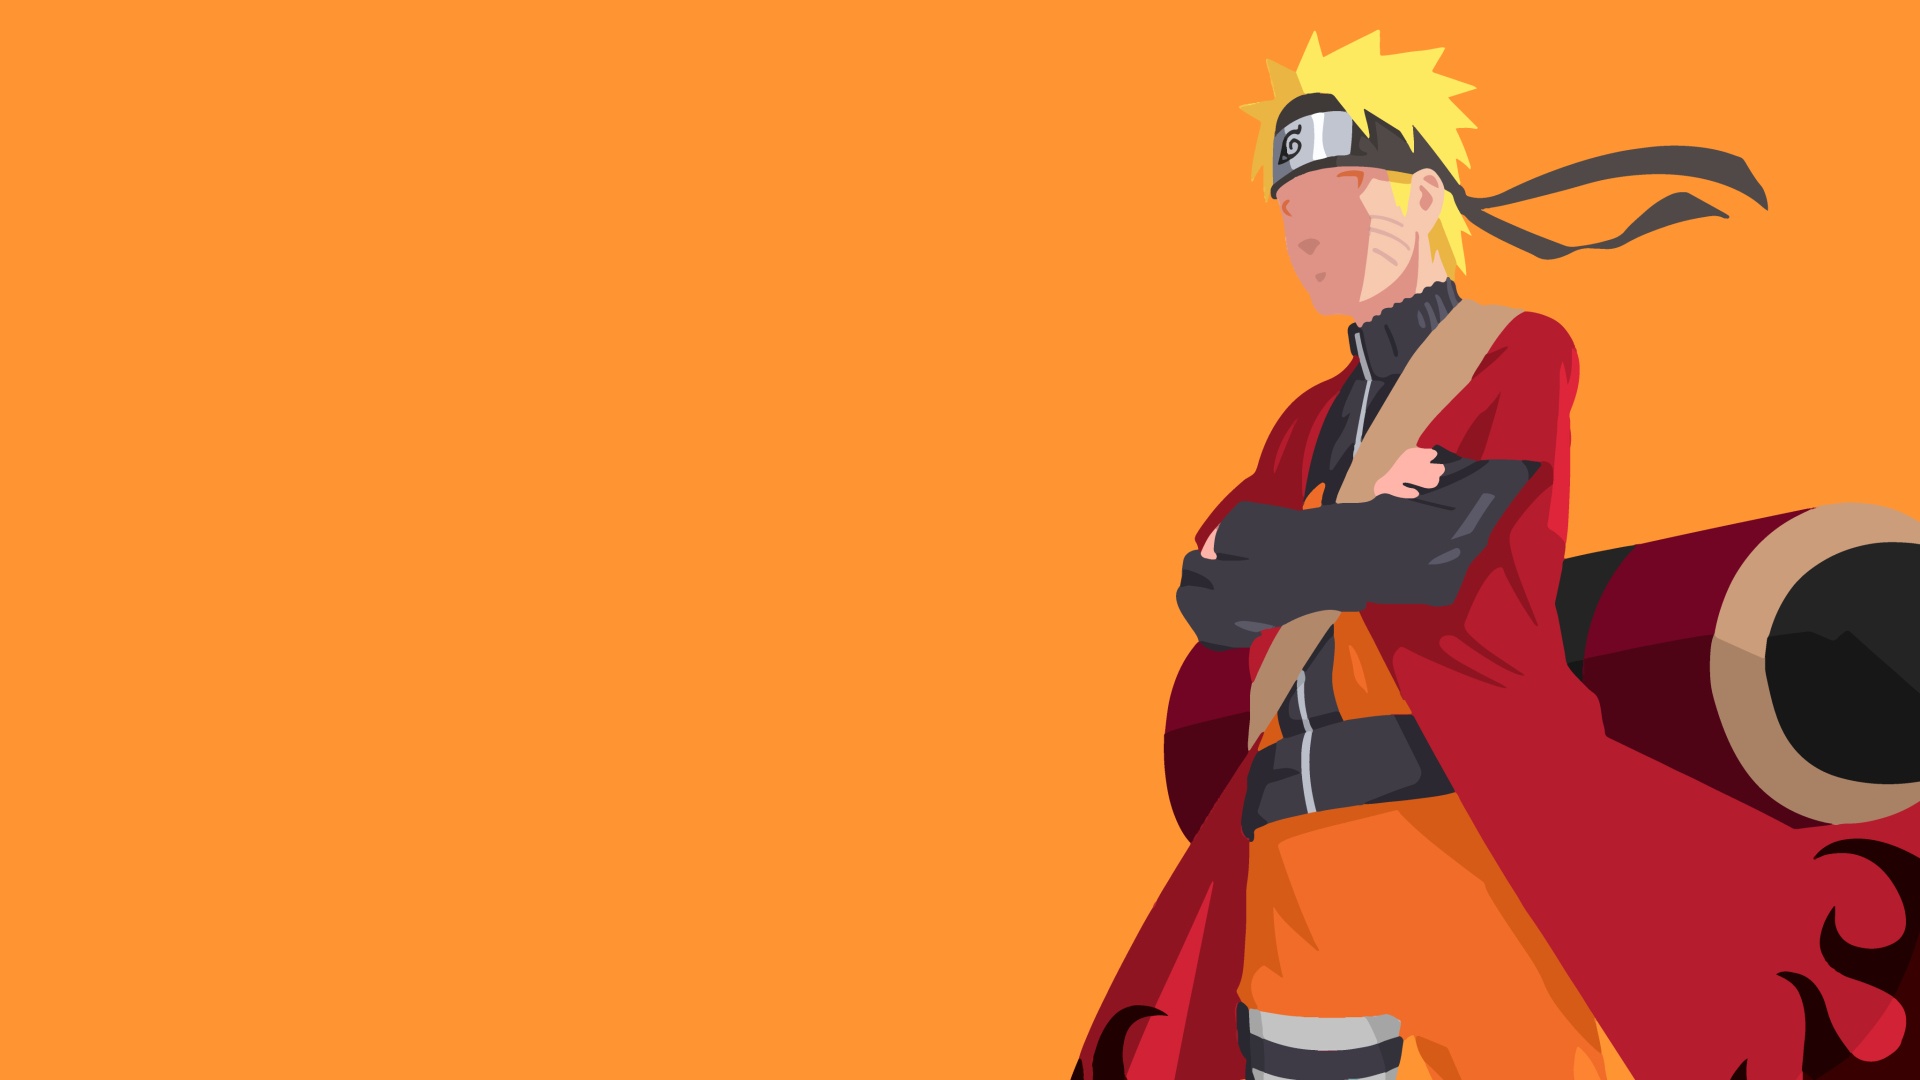 Naruto free pic